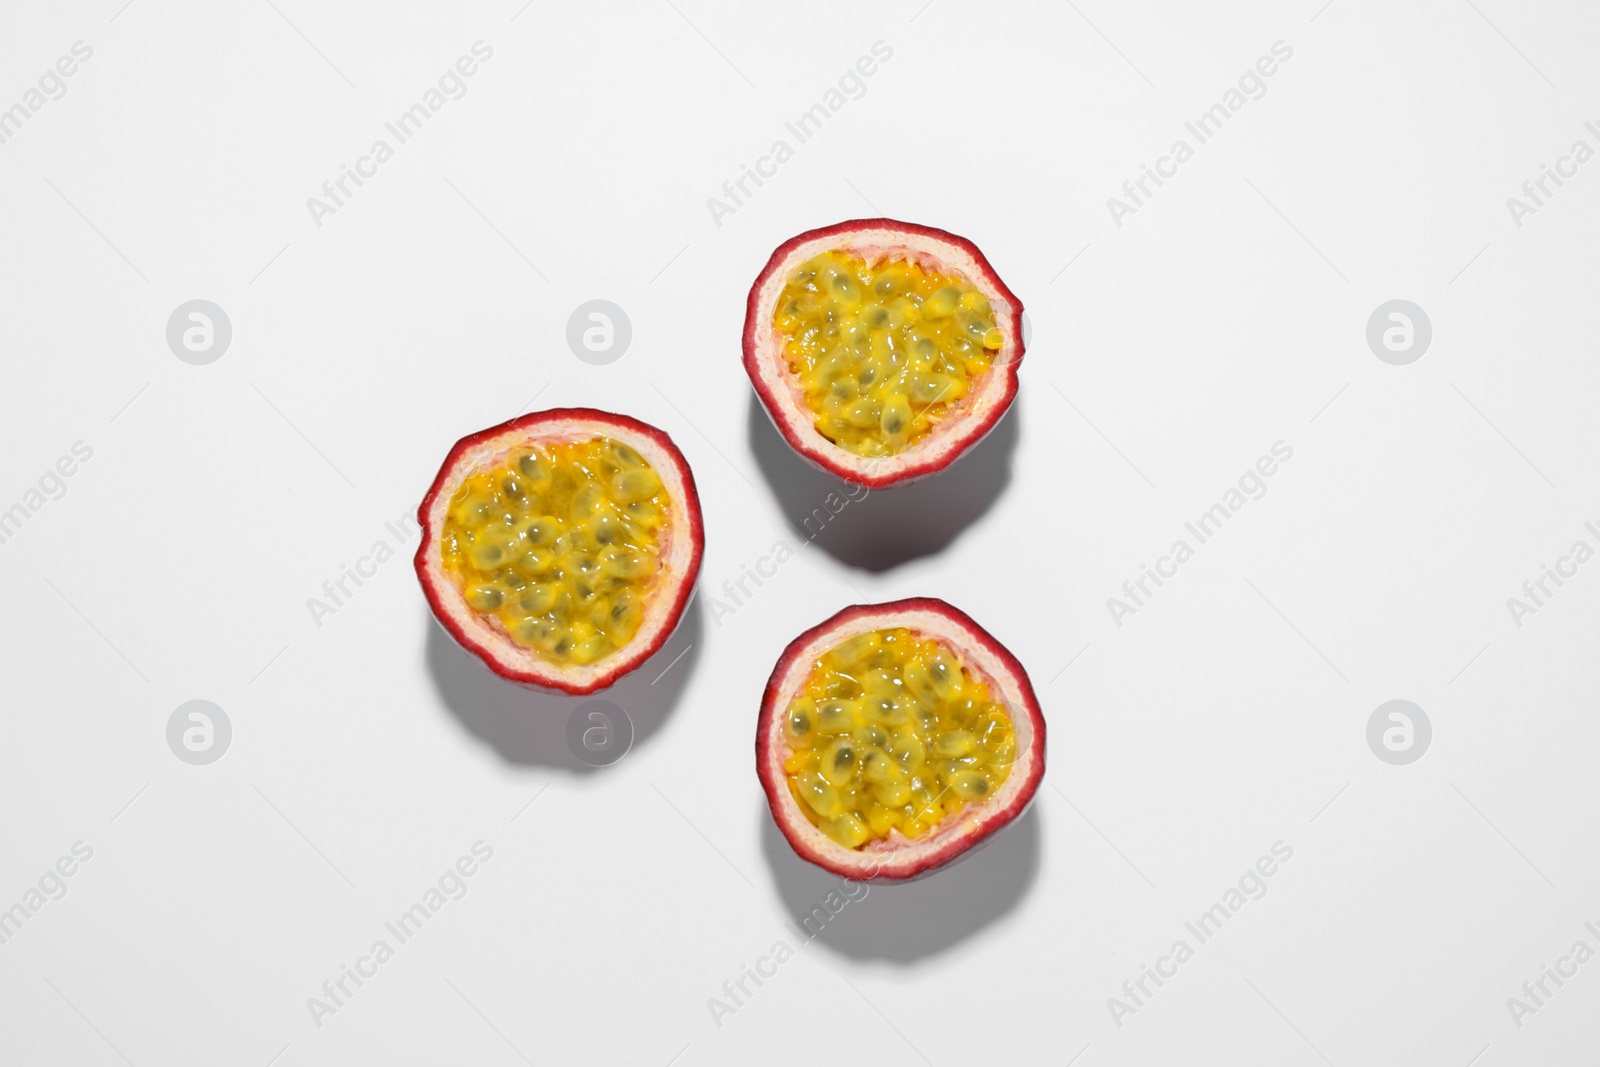 Photo of Halves of passion fruits (maracuyas) on white background, flat lay